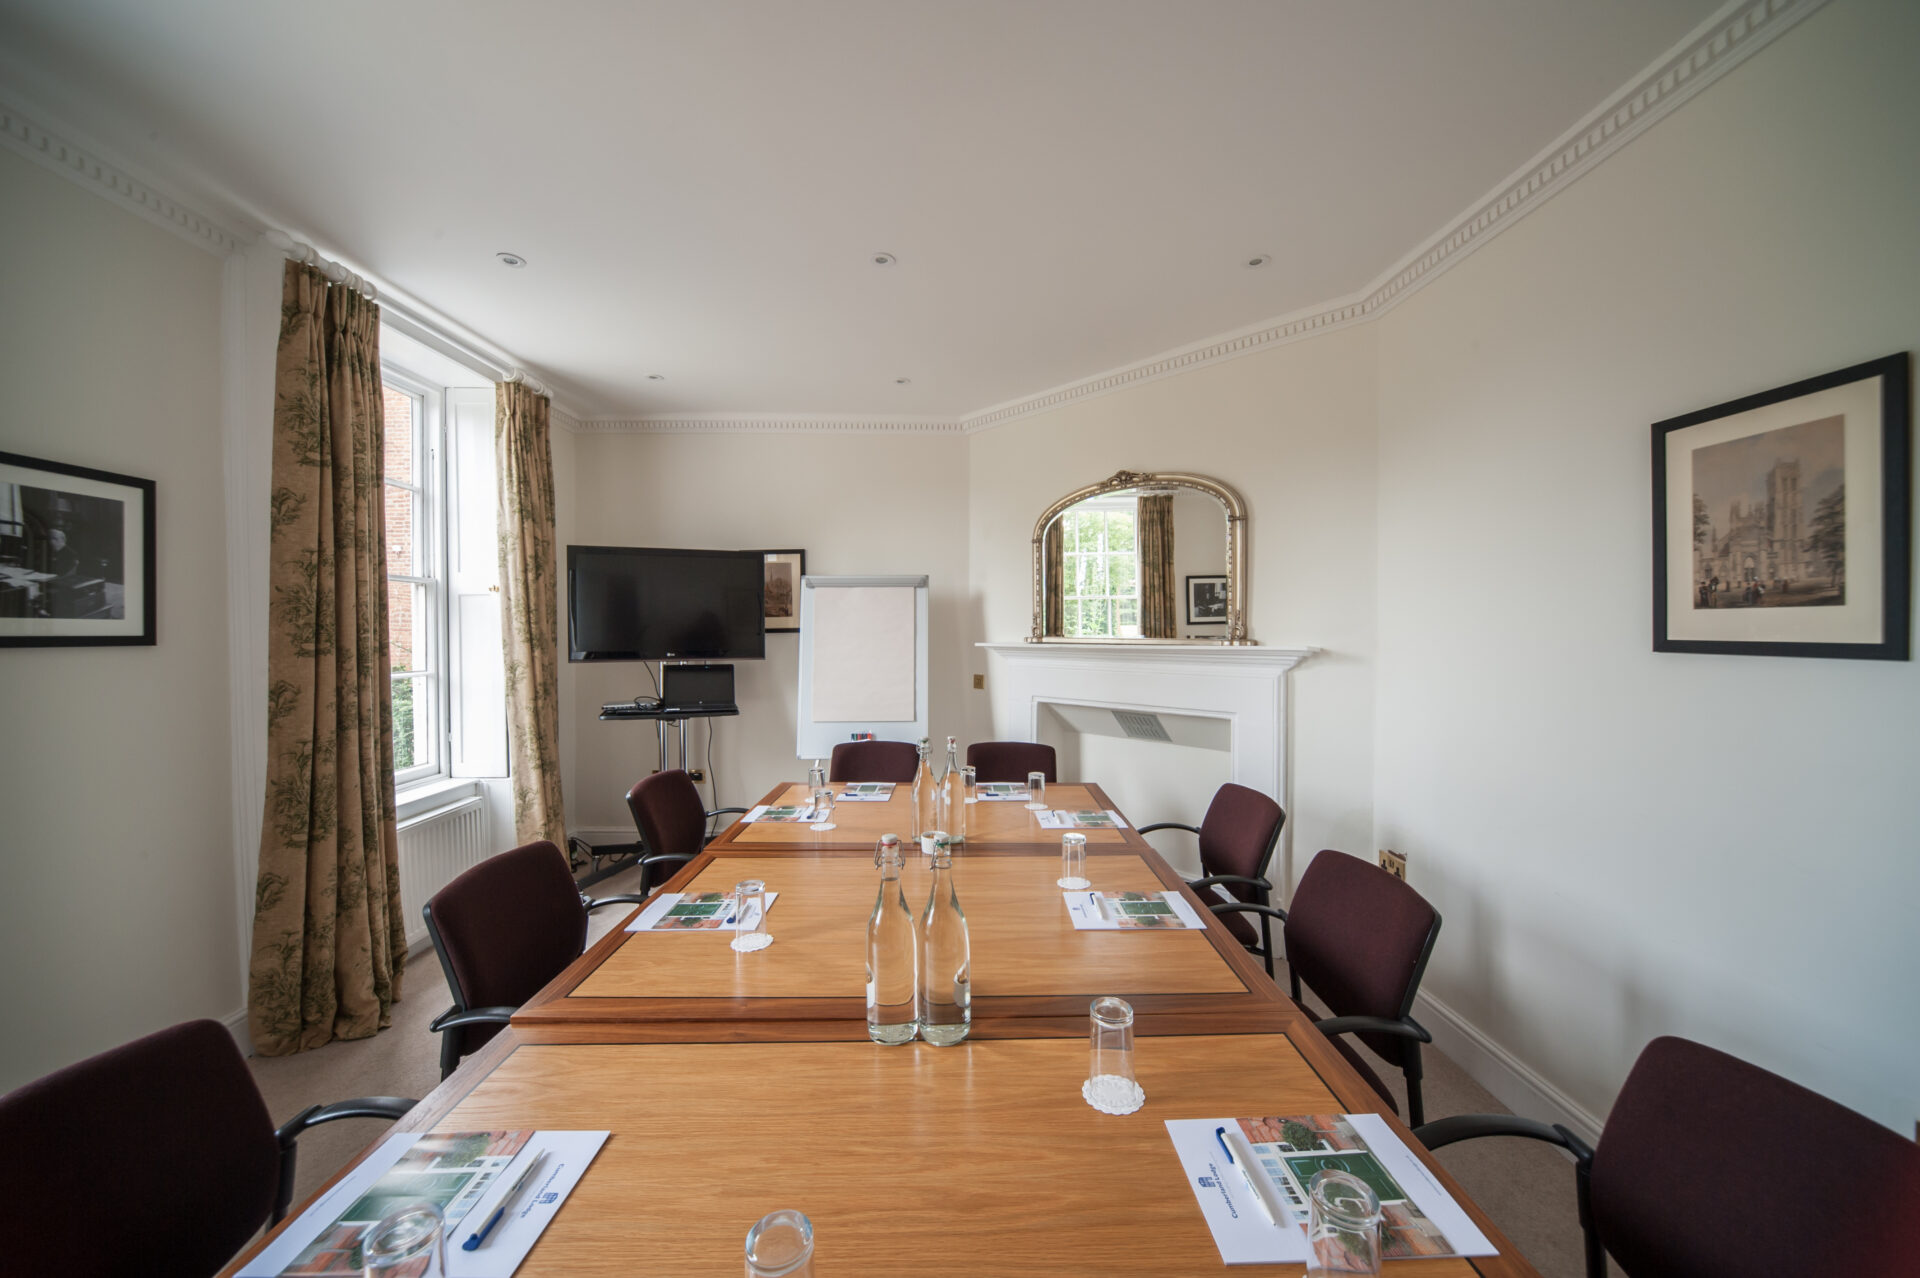 The Halifax meeting room in Groom's House.